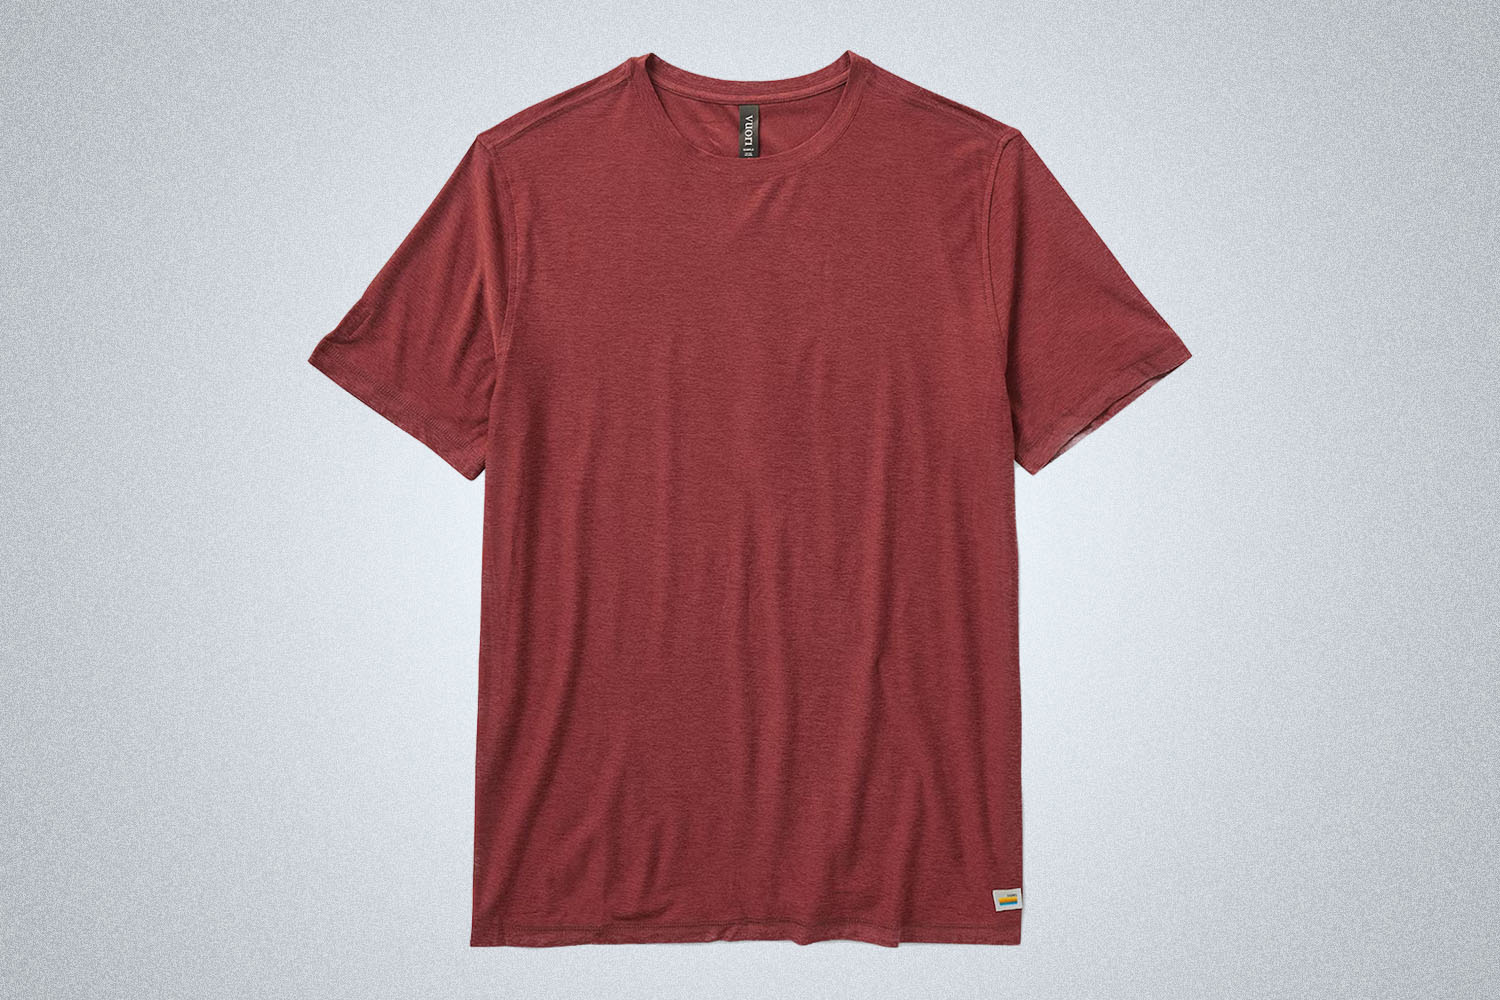 Best Anti-Sweat T-Shirt: Vuori Stratos Tech Tee